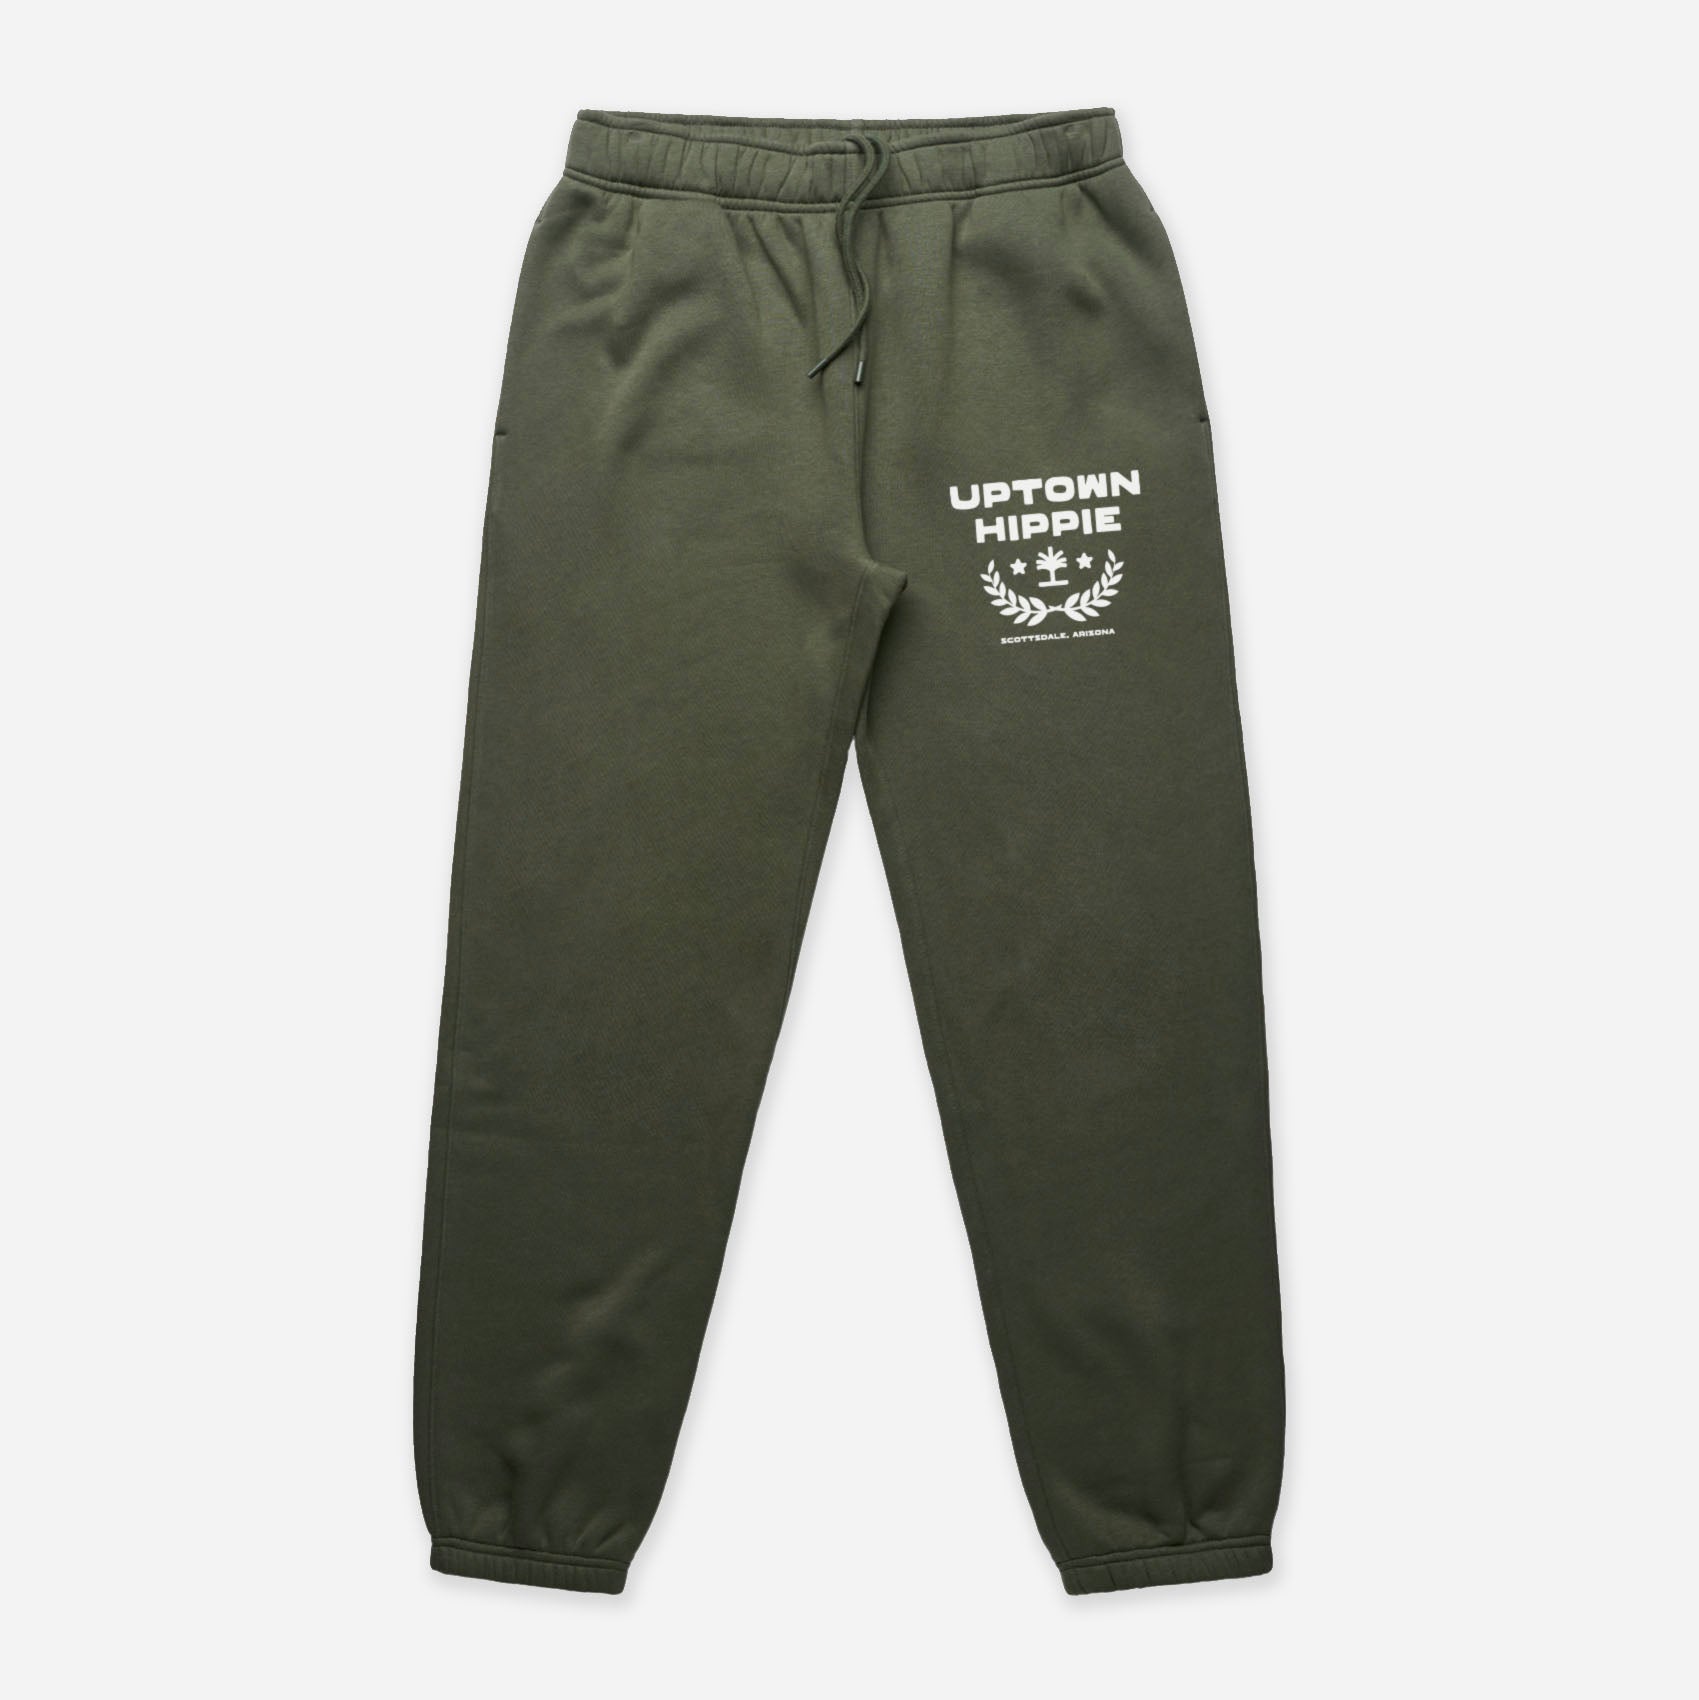 Unisex Elite Sweatpants (Army Green)